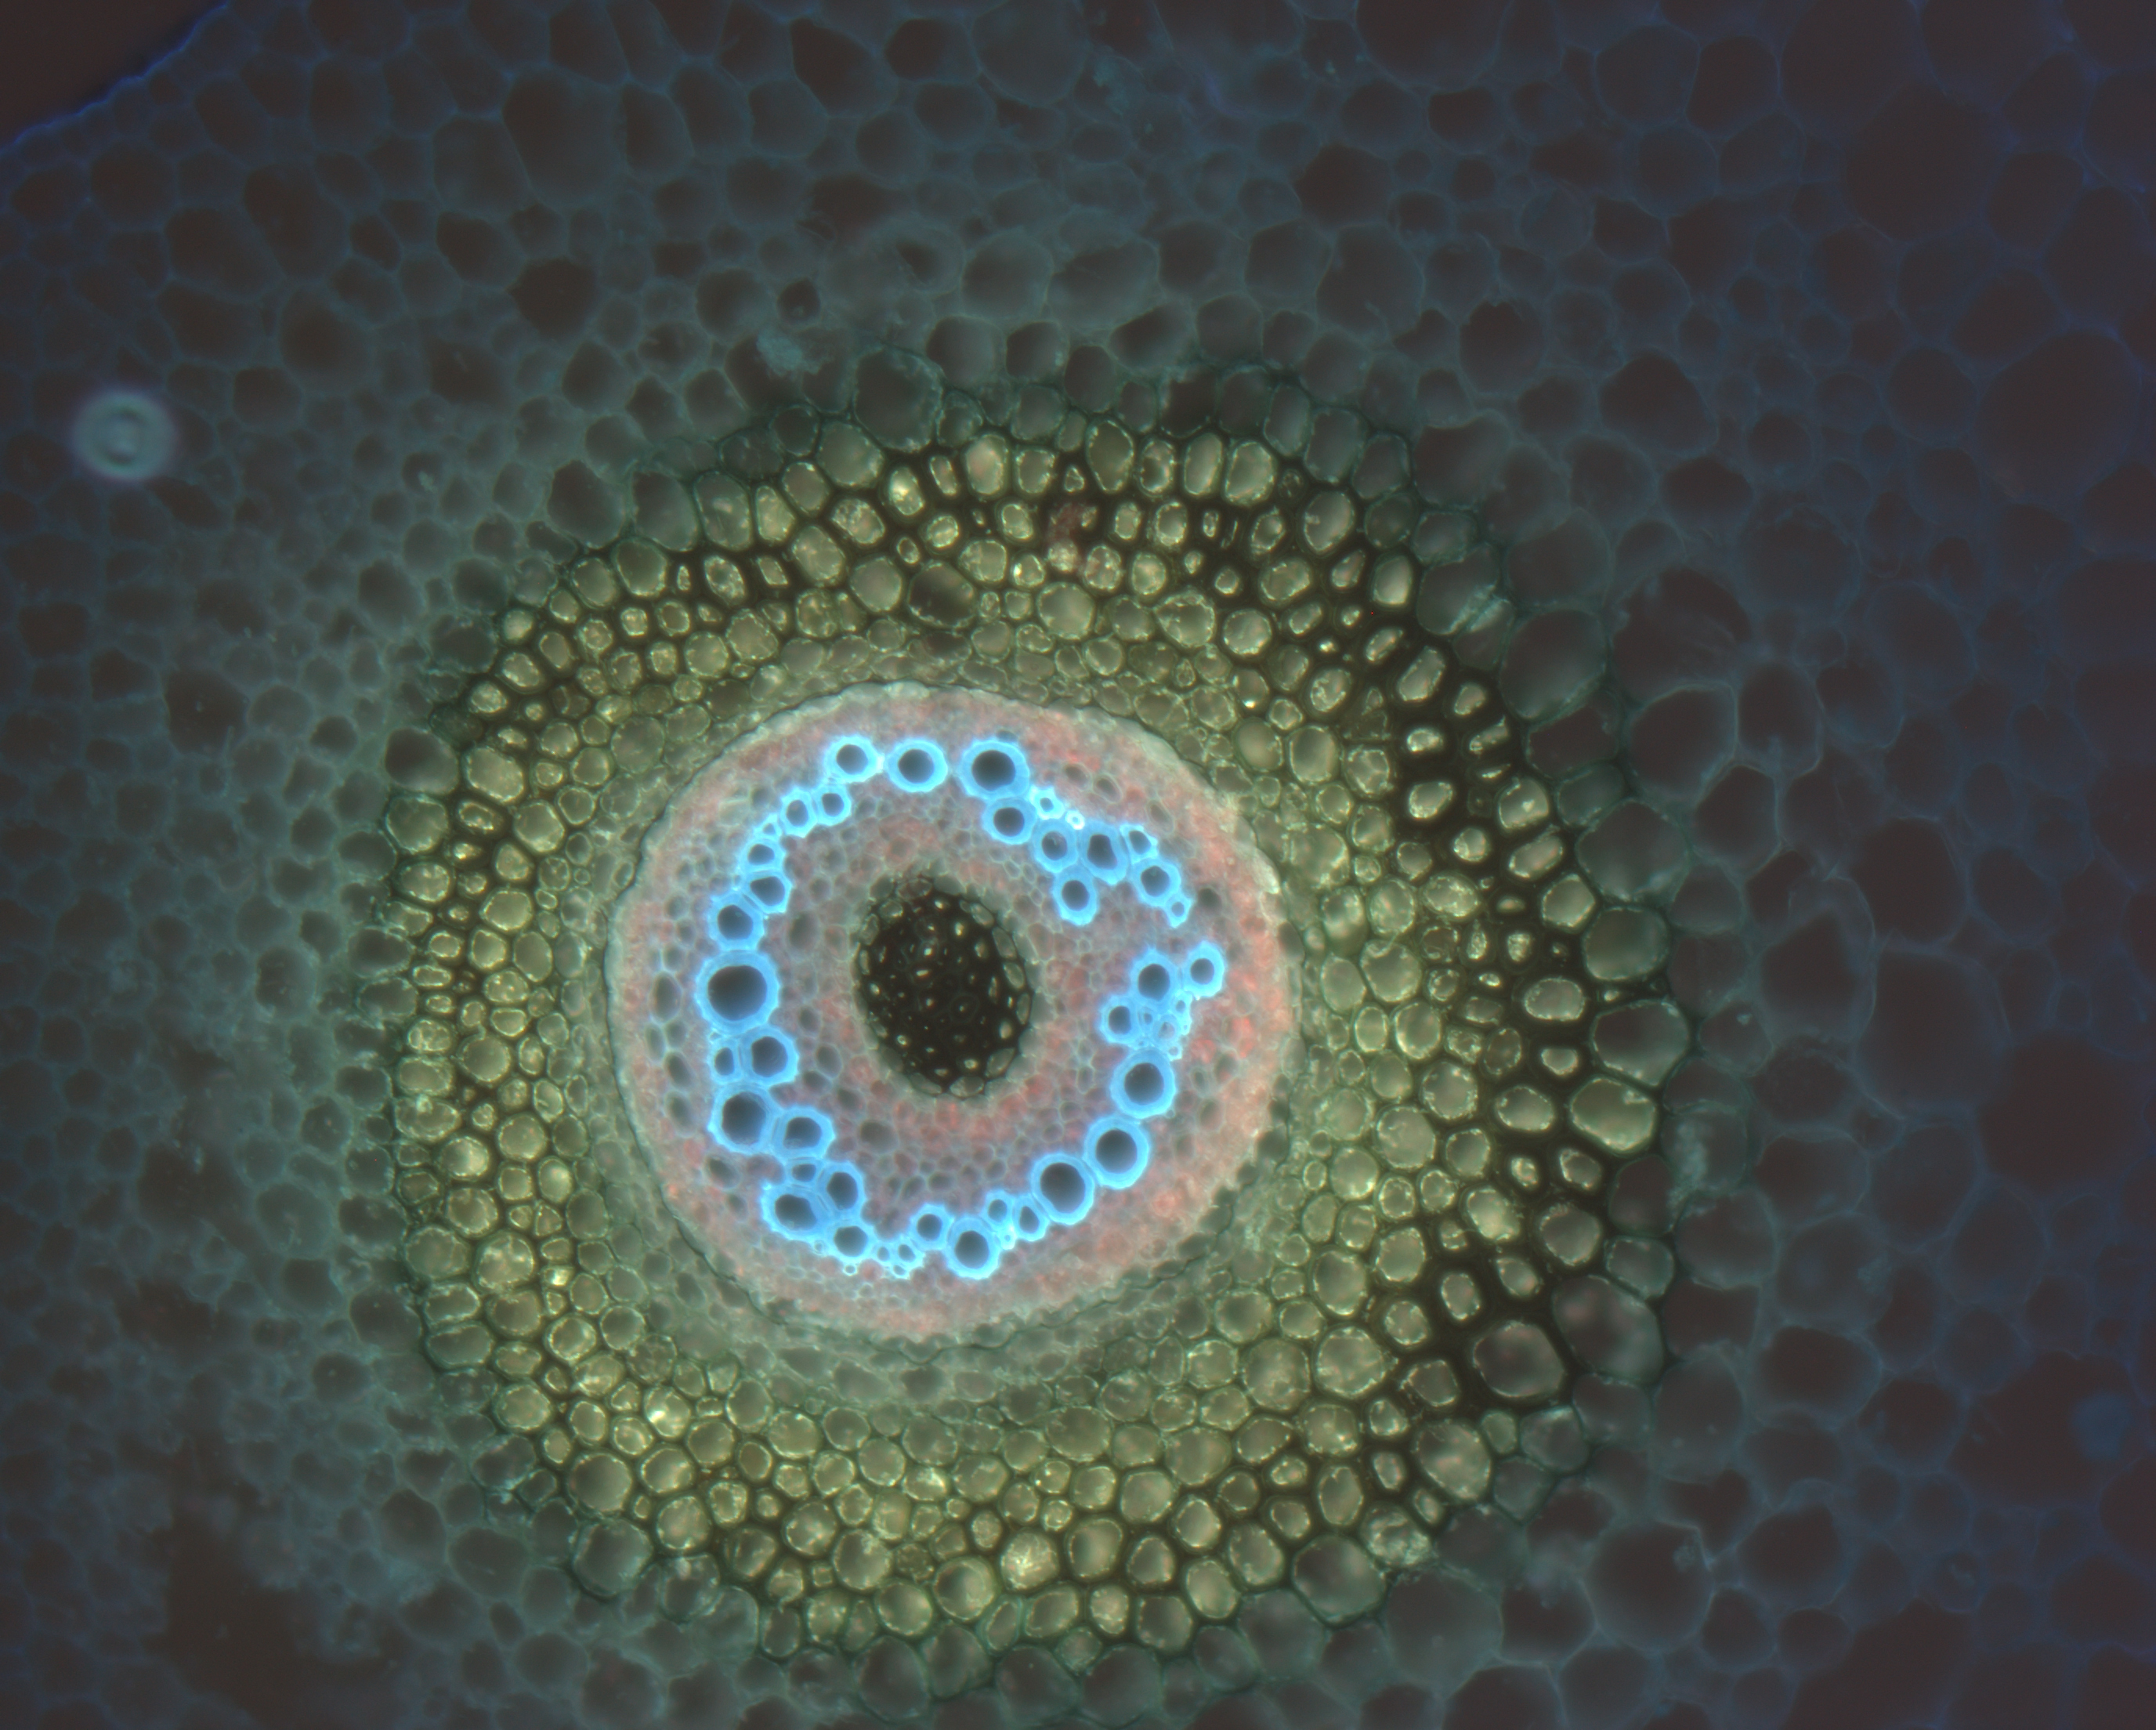 fern under microscope